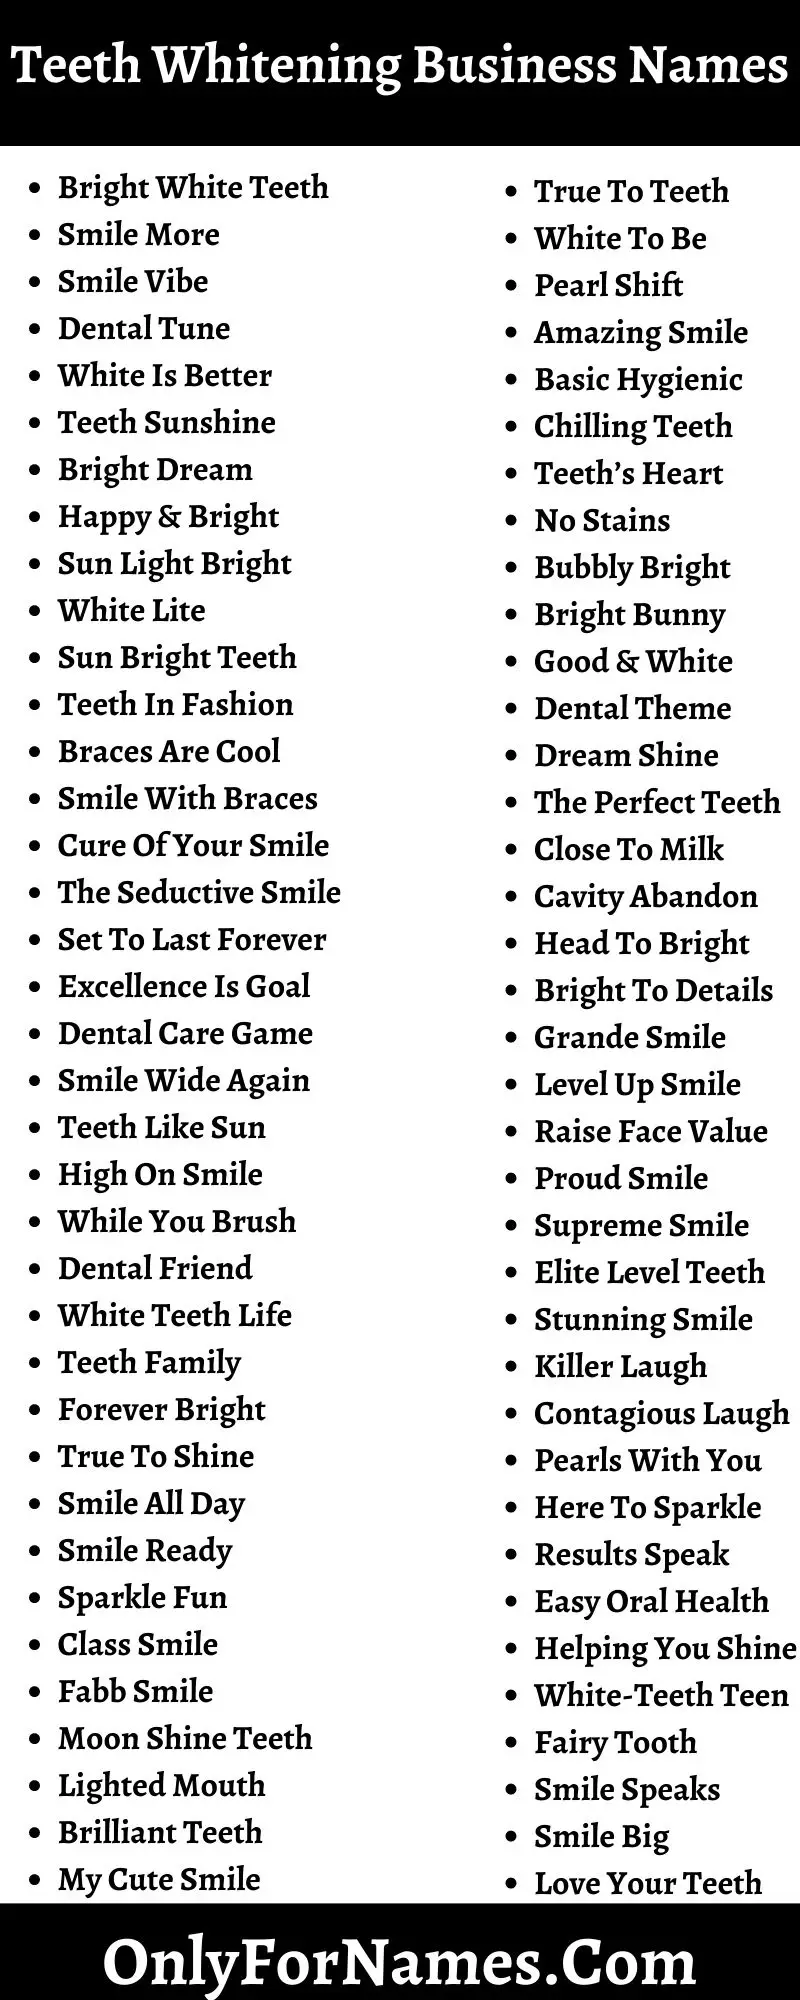 Teeth Whitening Business Names